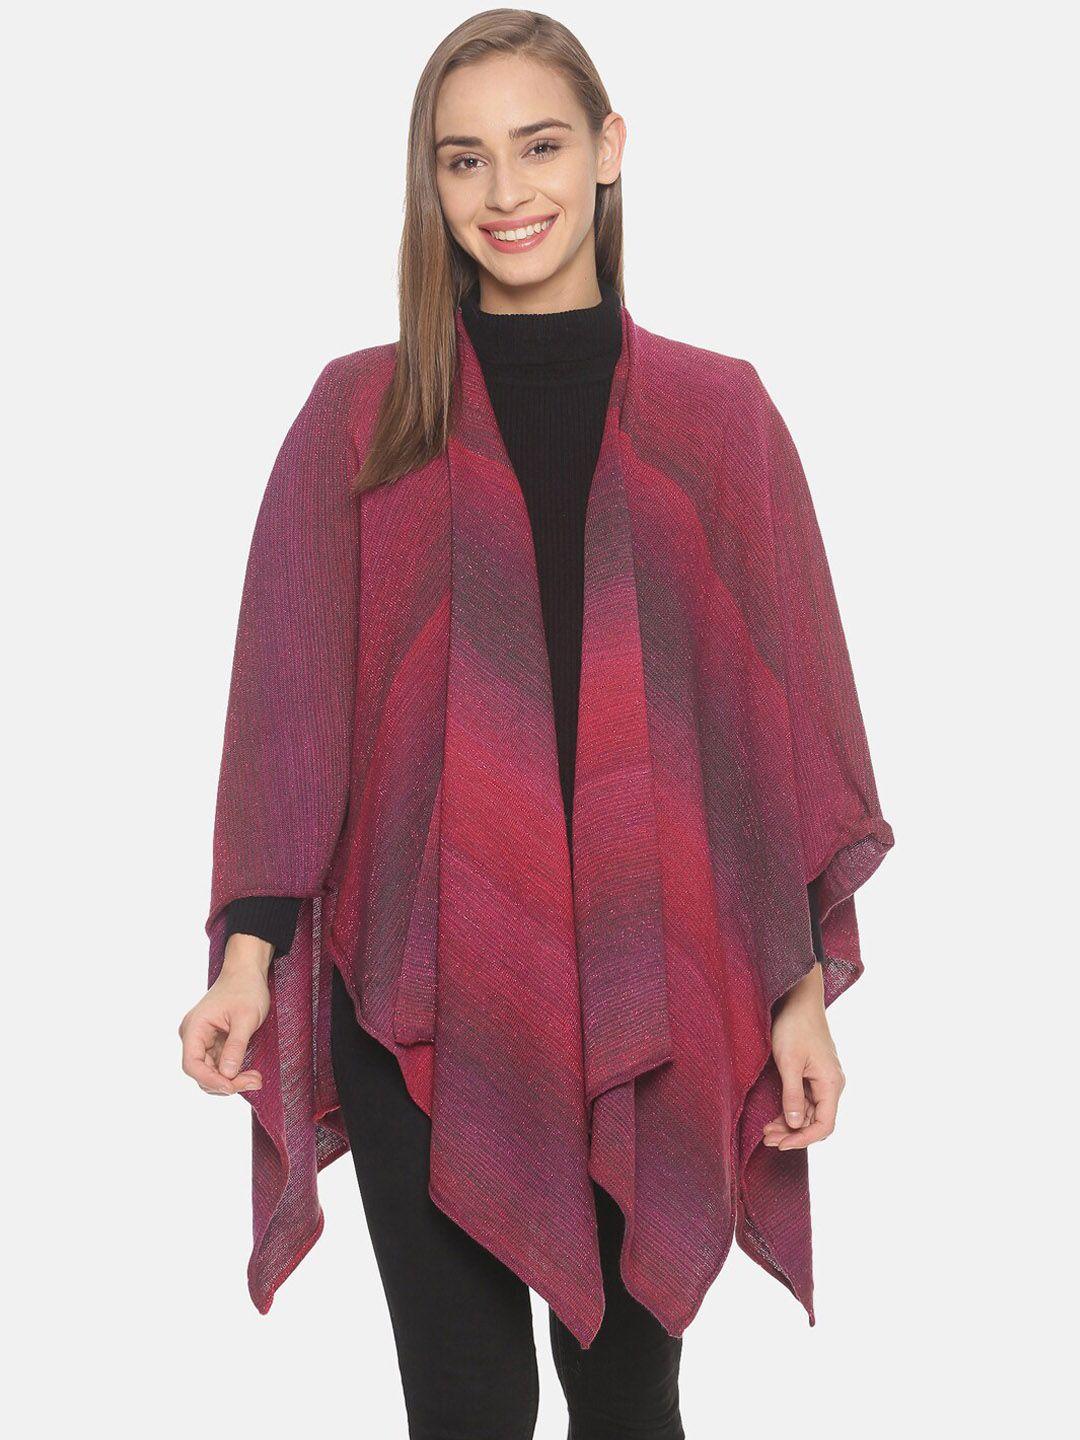 513 women pink & grey striped acrylic kimono shrug